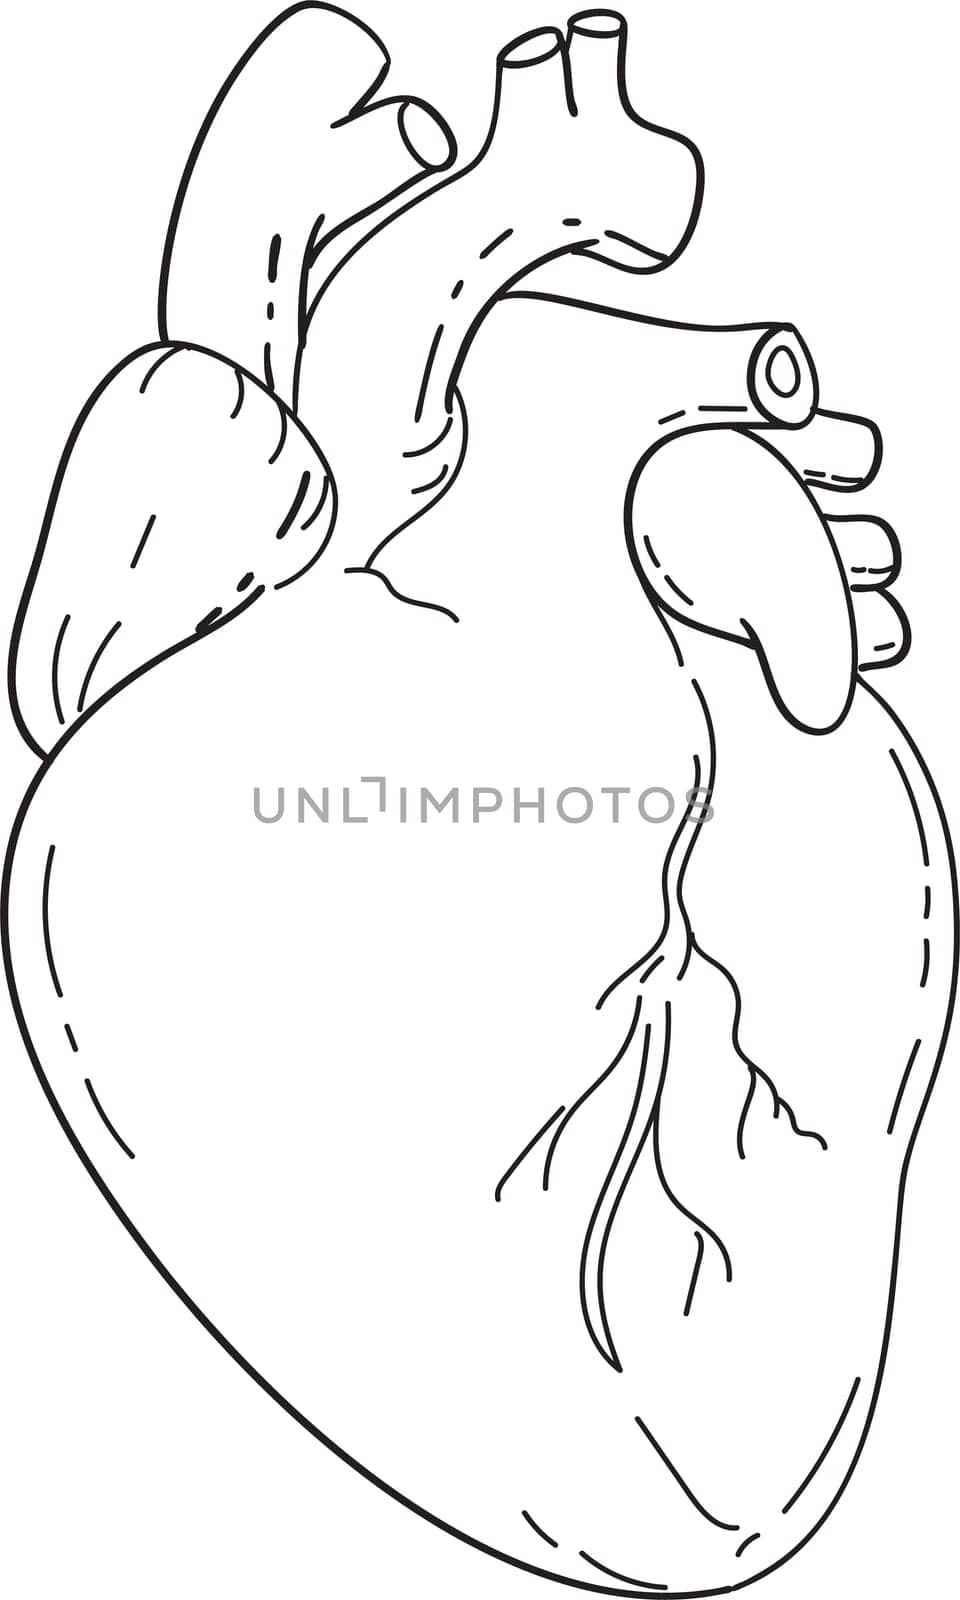 Human Heart Anatomy Mono Line Art Drawing by patrimonio